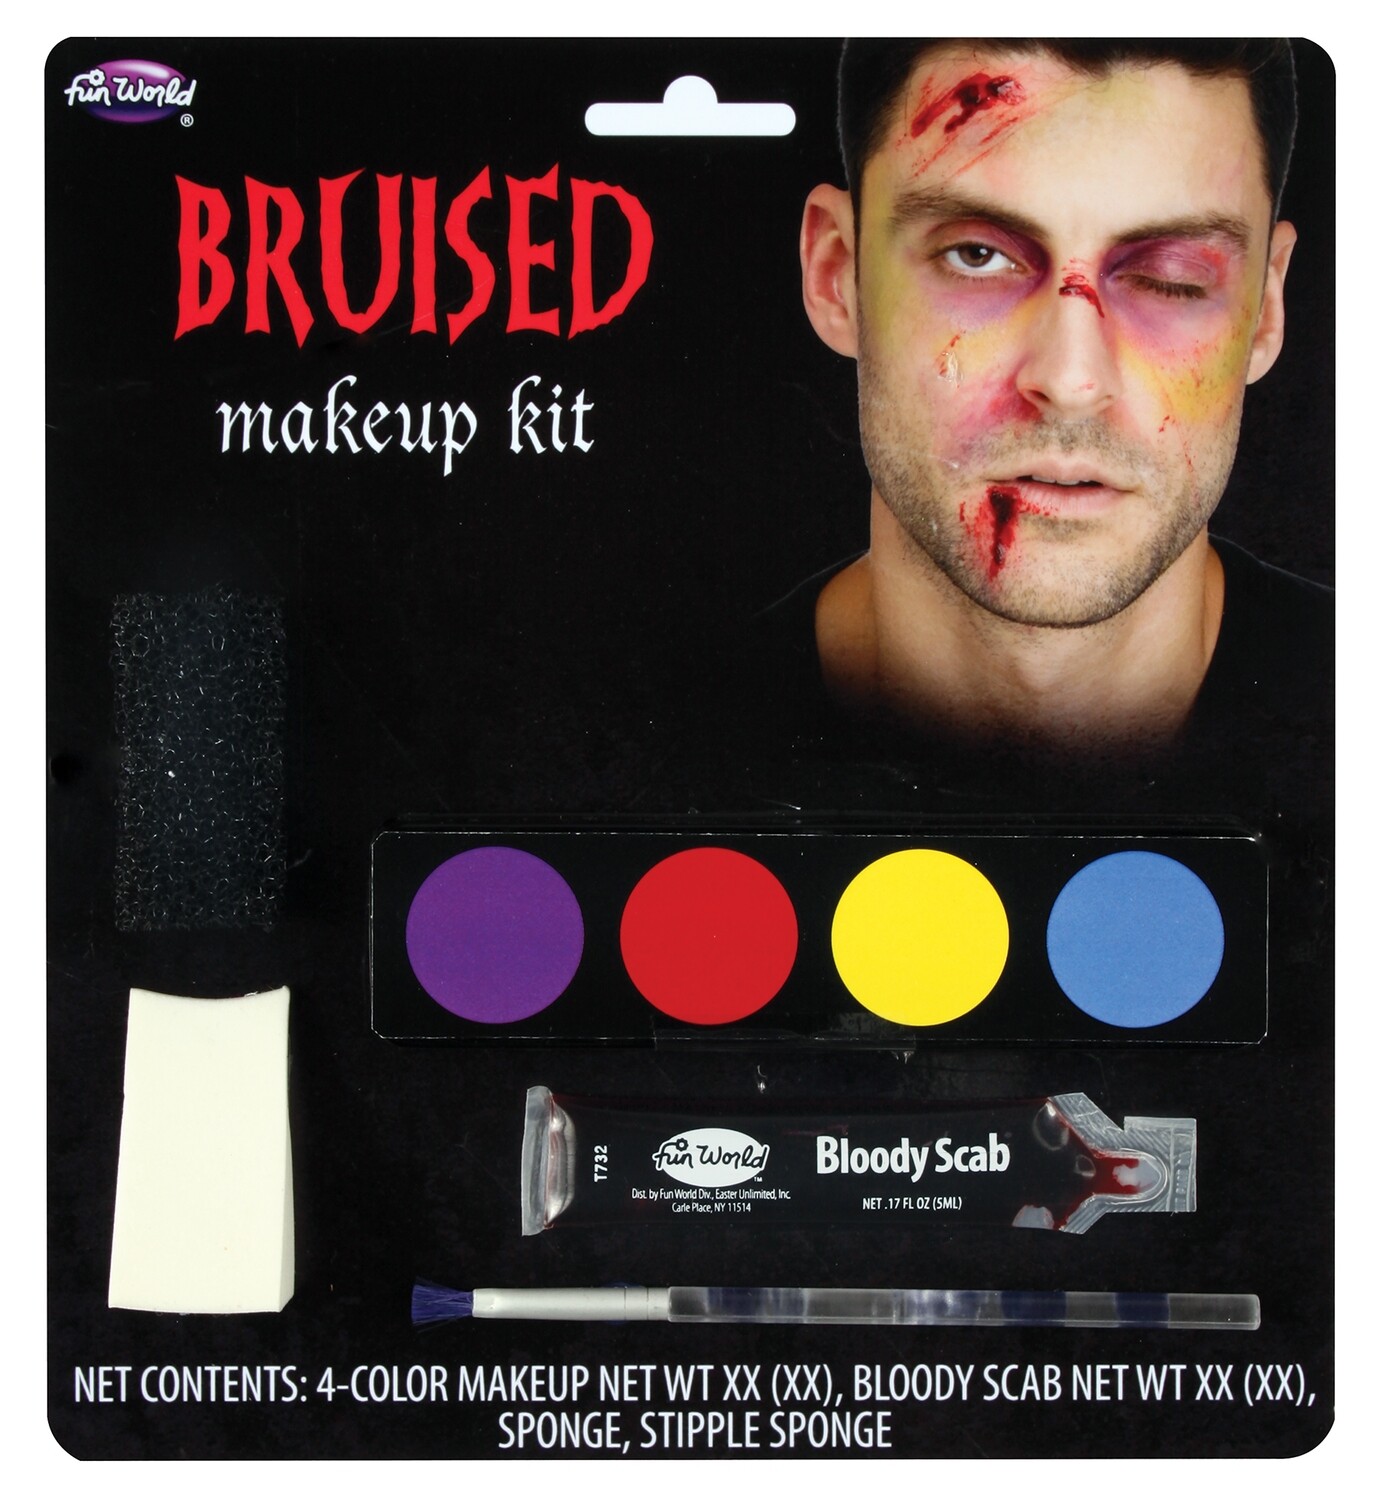 Bruised Makeup Kit